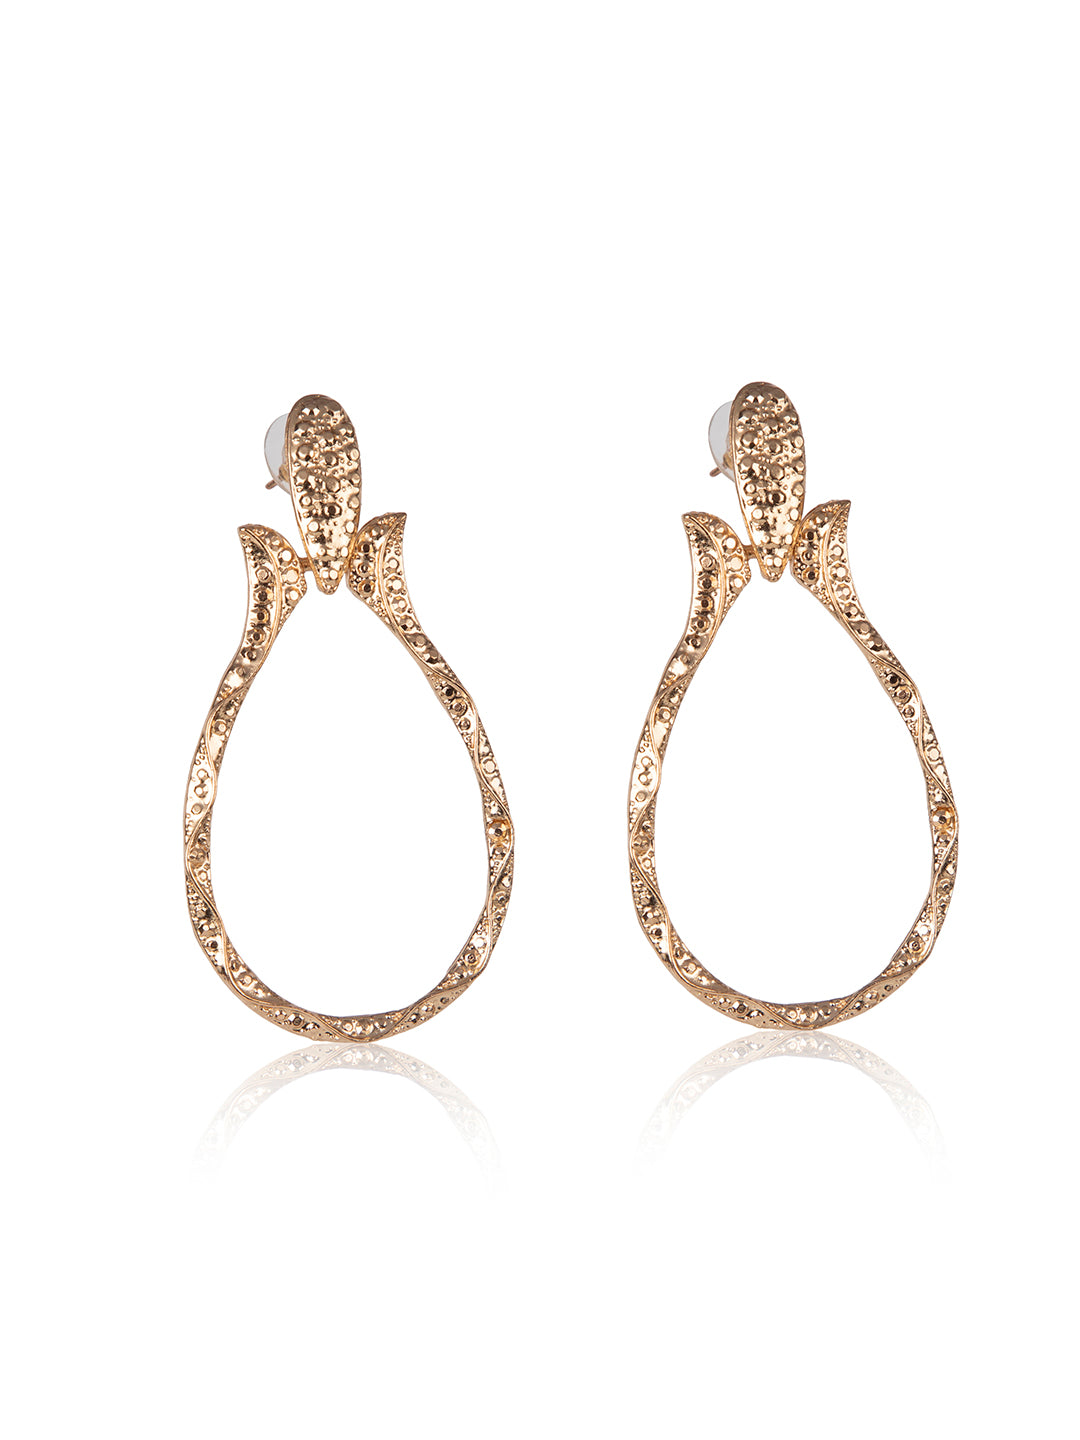 Prita by Priyaasi Gold Plated Contemporary Drop Earrings